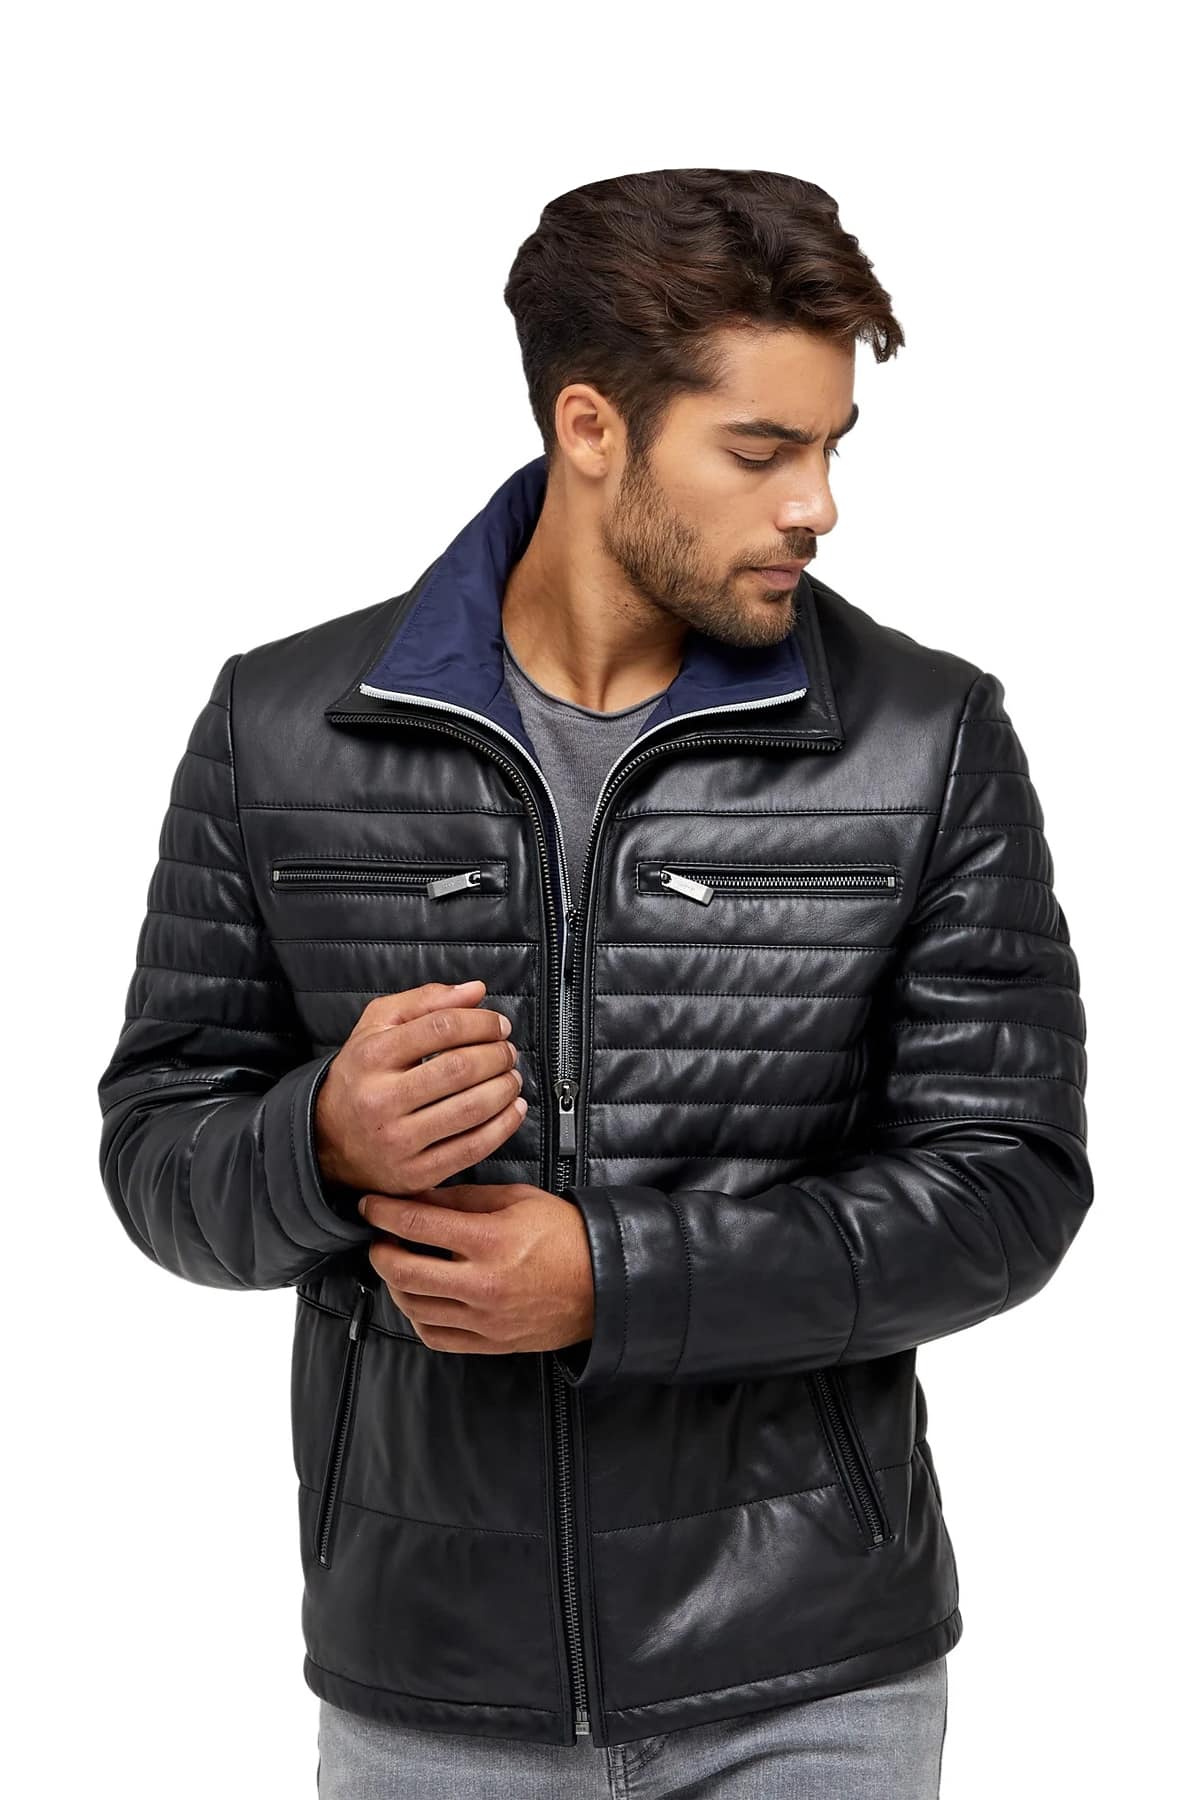 Mens Fashion Black Leather Jacket - 100% Genuine Gents Leather Jacket